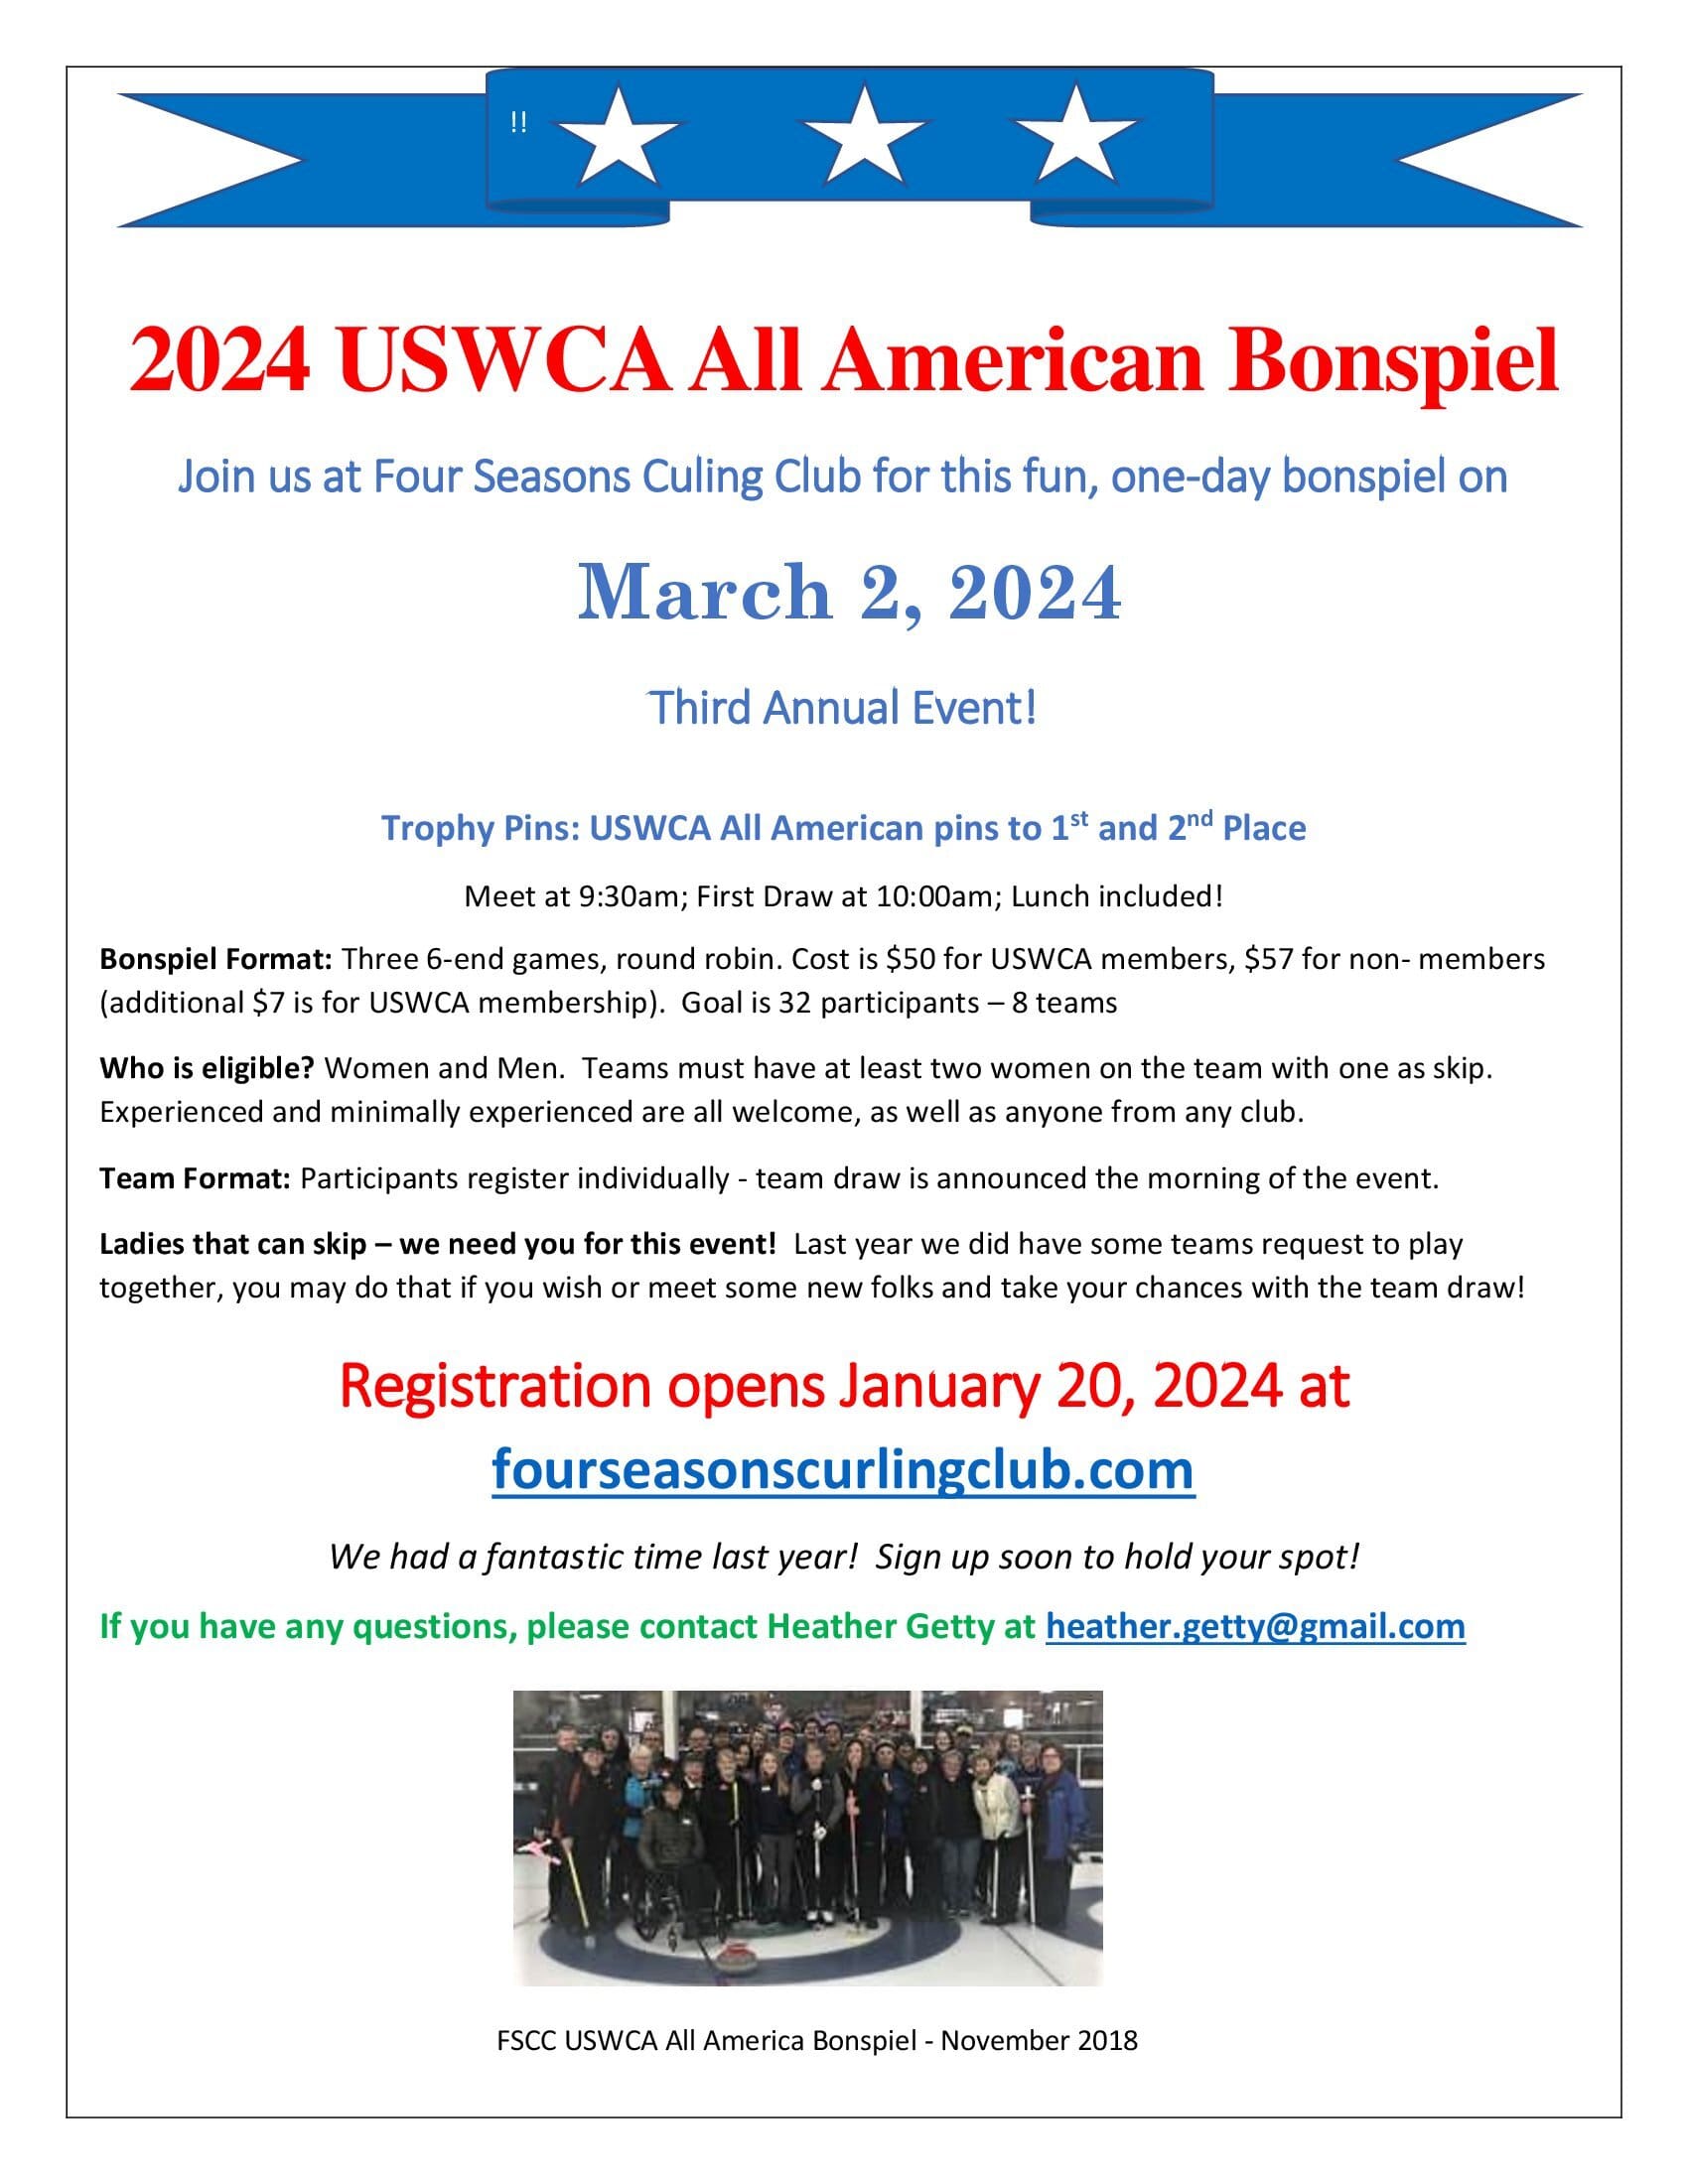 USWCA All American Bonspiel 3